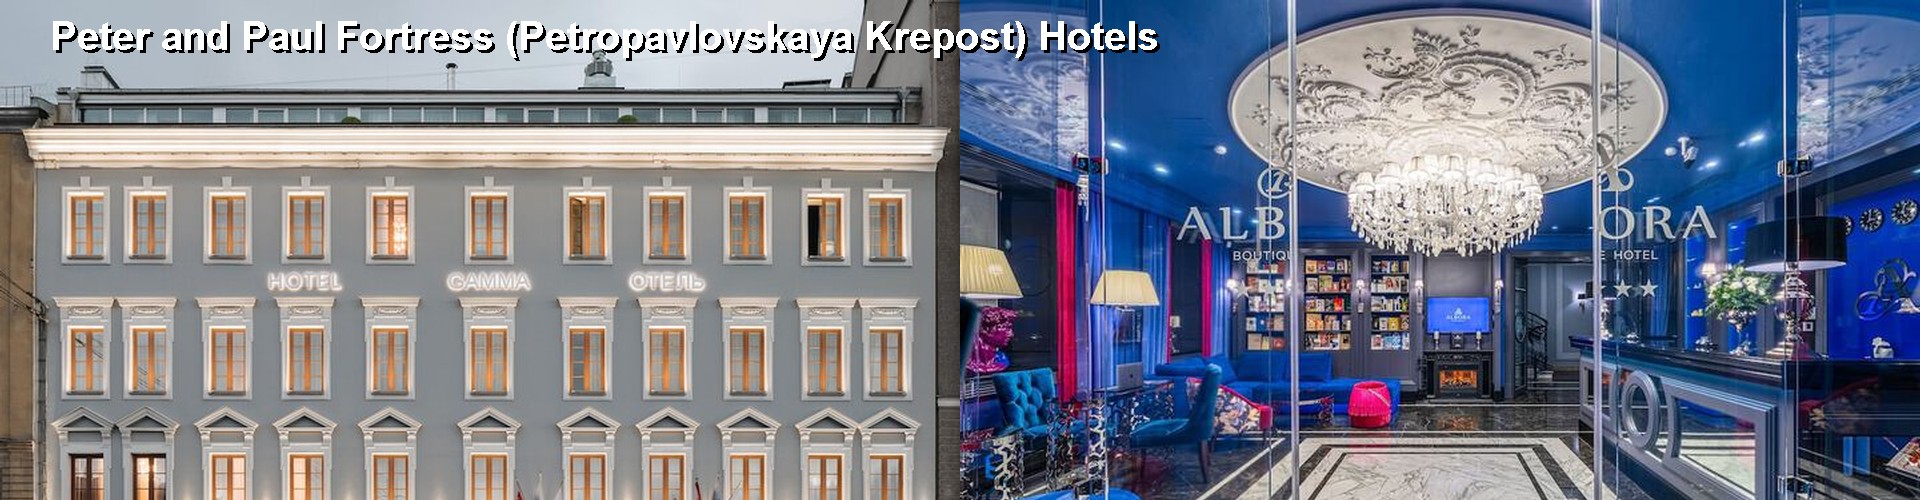 5 Best Hotels near Peter and Paul Fortress (Petropavlovskaya Krepost)